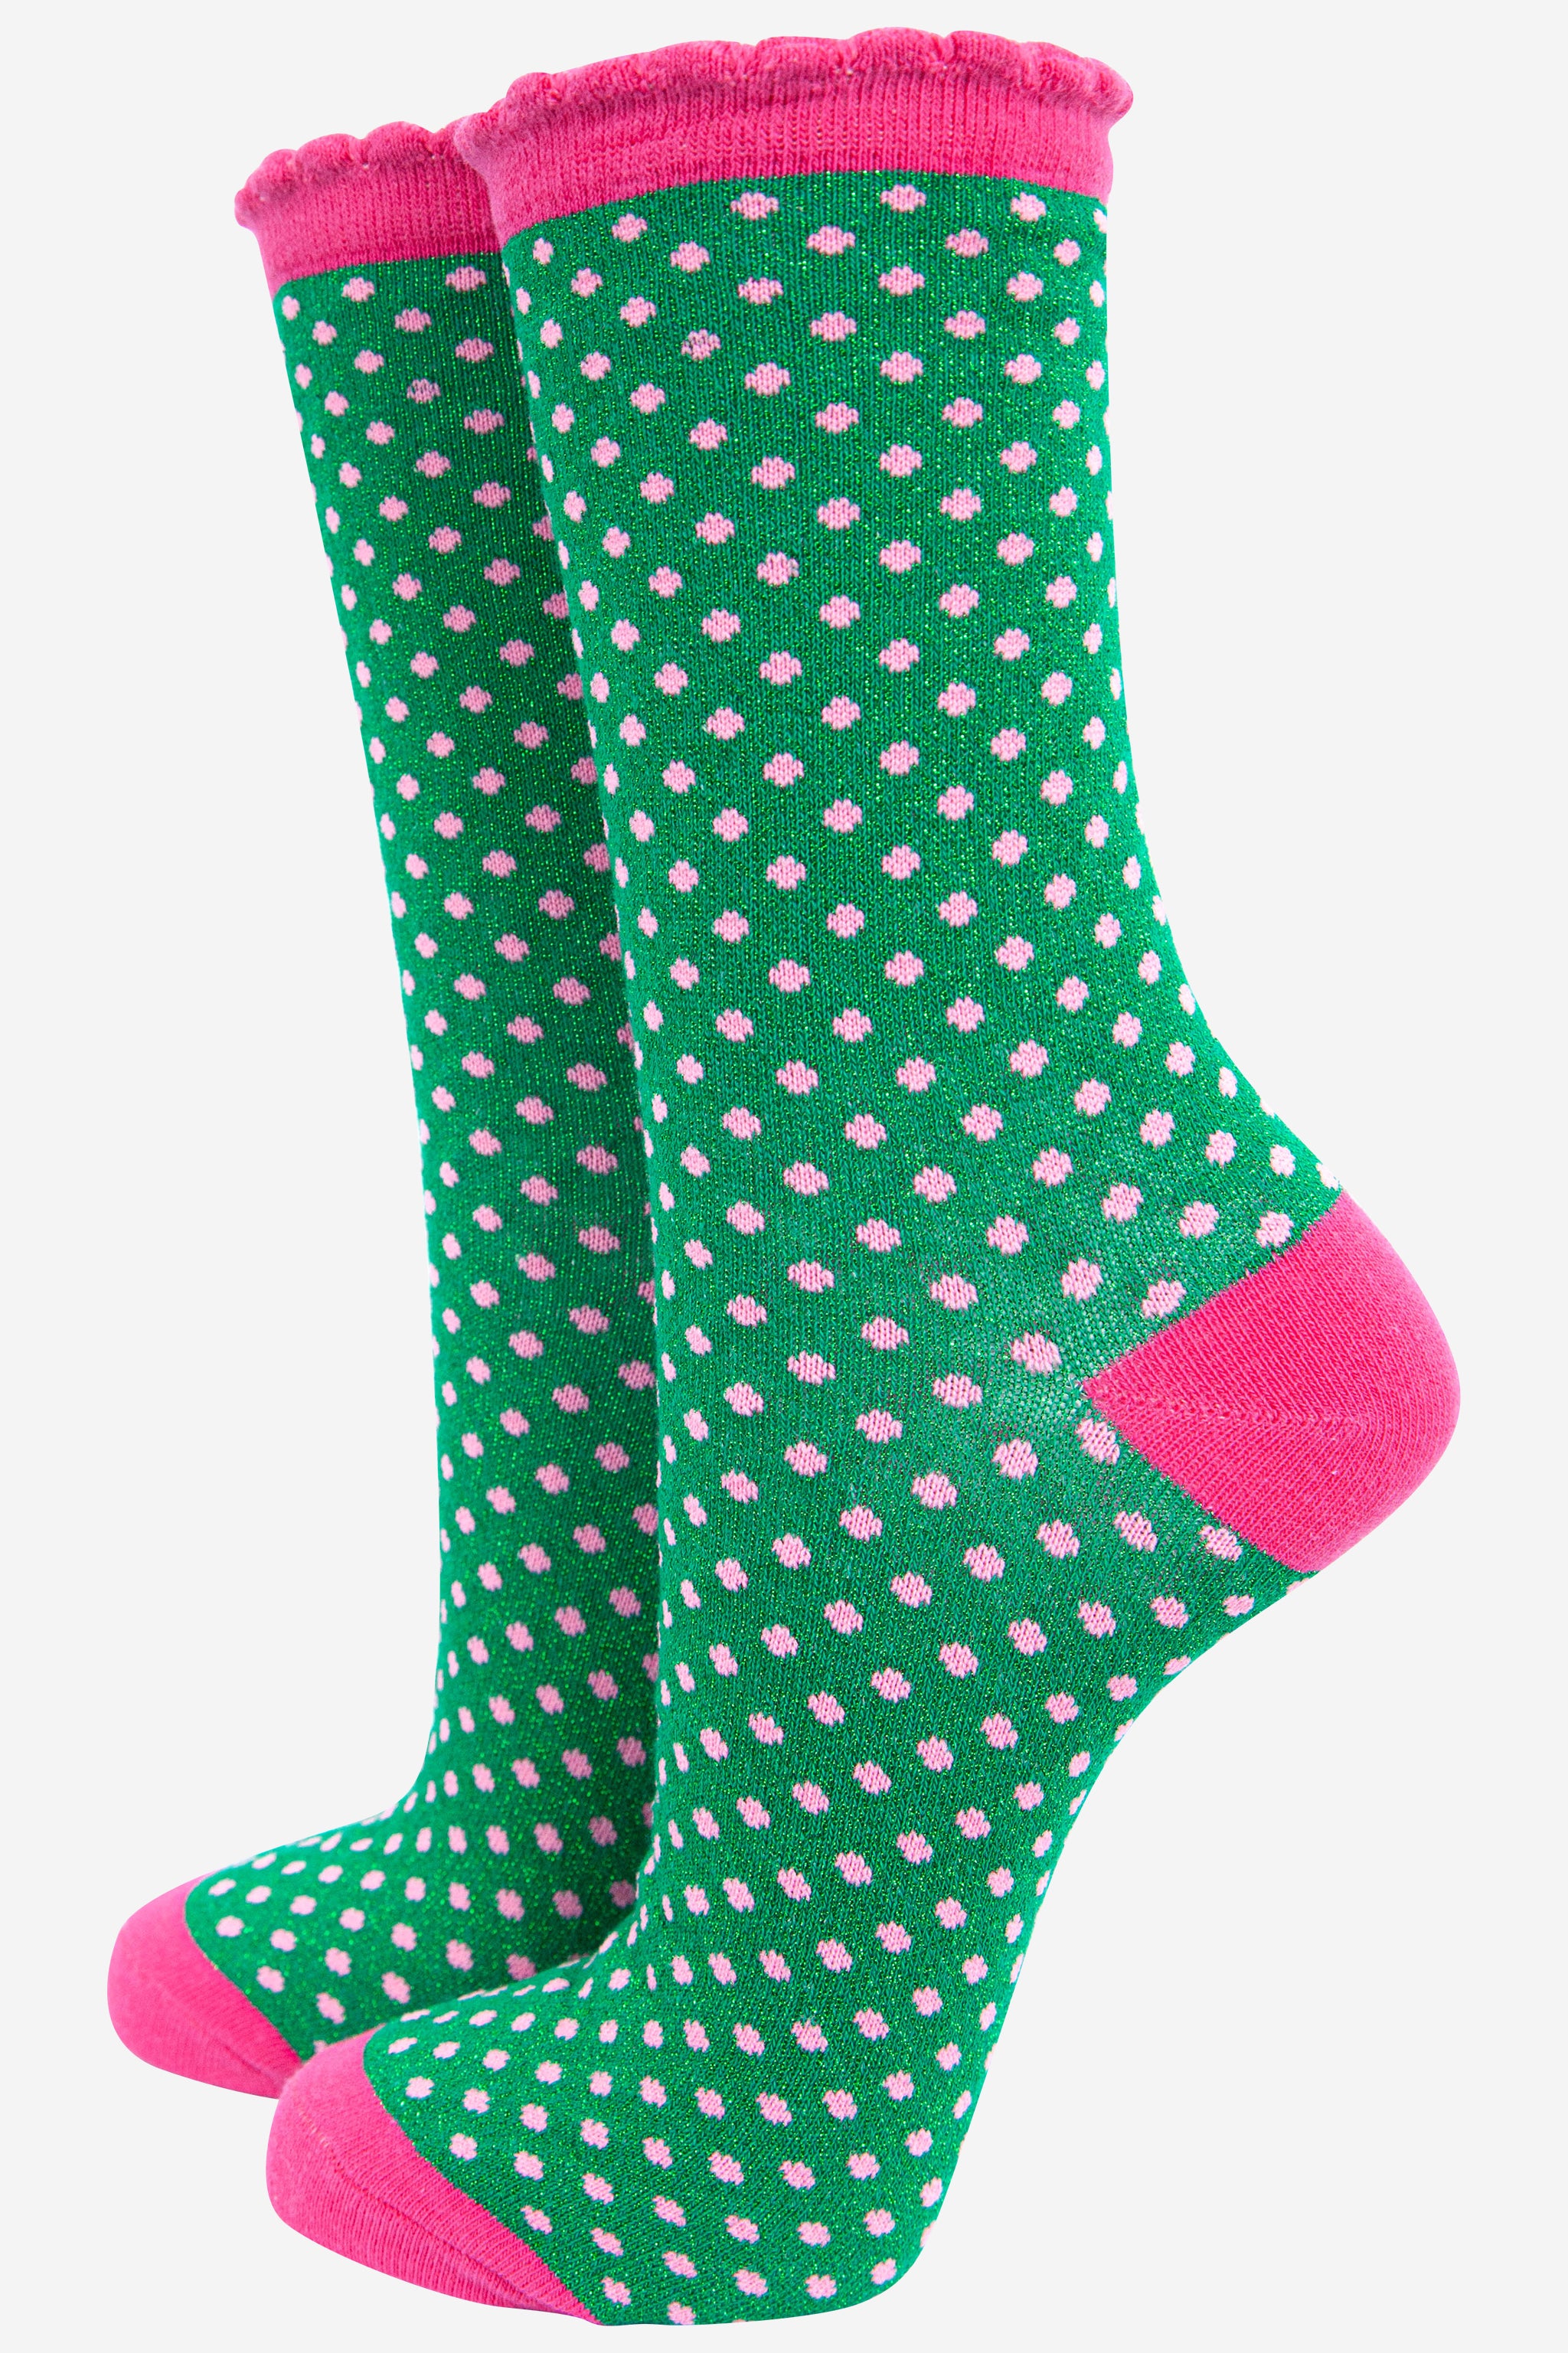 Glitter Cotton Socks in Polkadot Pink & Green